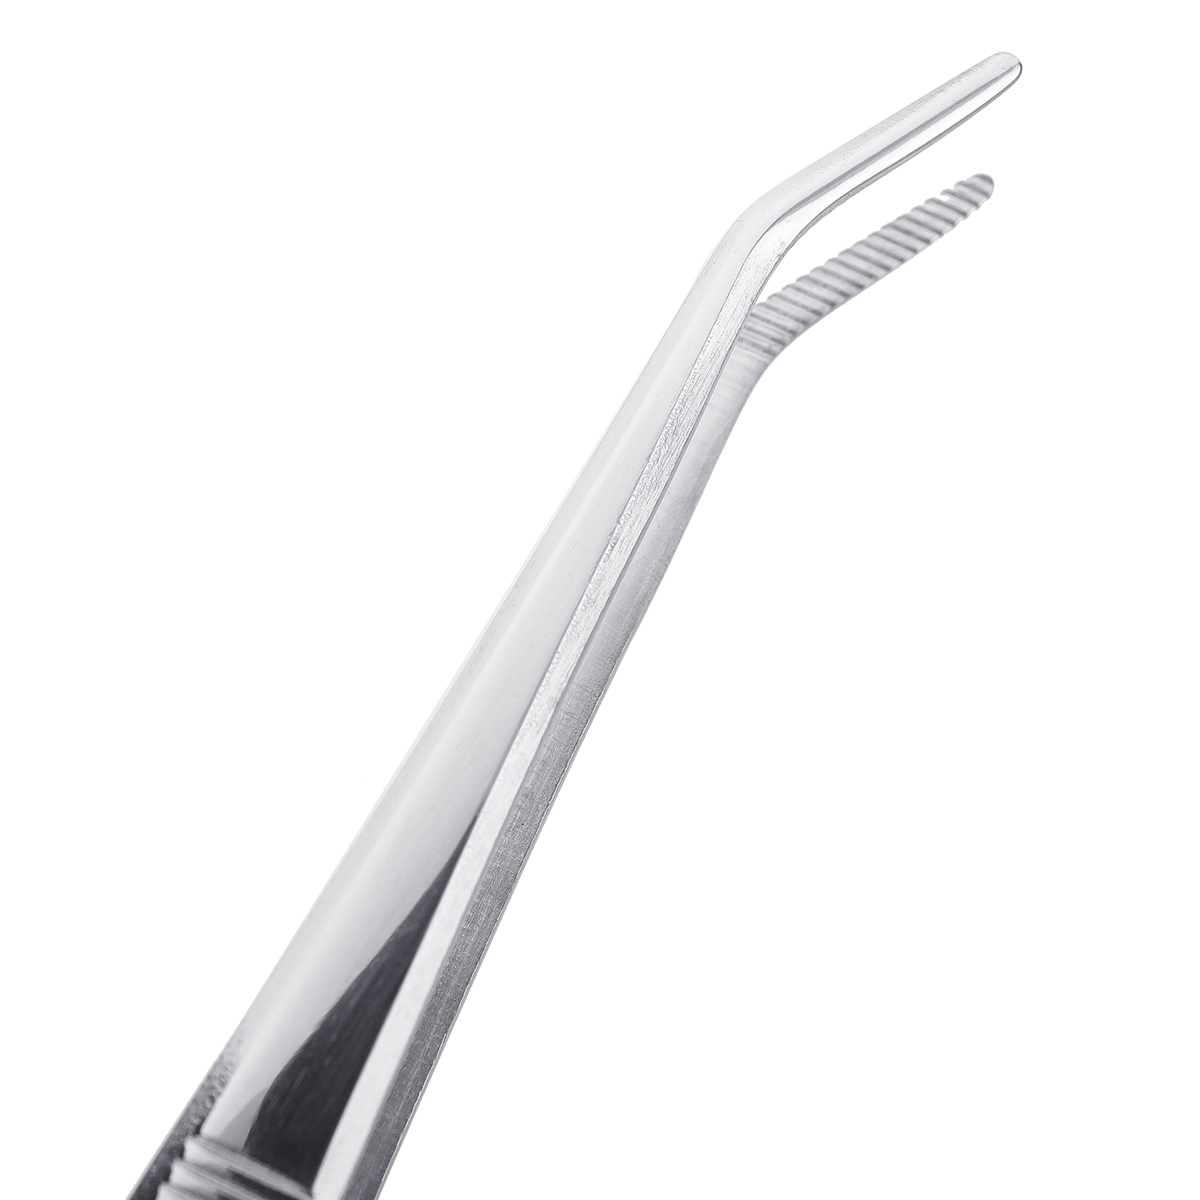 5pcs-Stainless-Oral-Care-Dental-Tools-Kit-Dentist-Teeth-Clean-Hygiene-Picks-Mirror-Tool-1320430